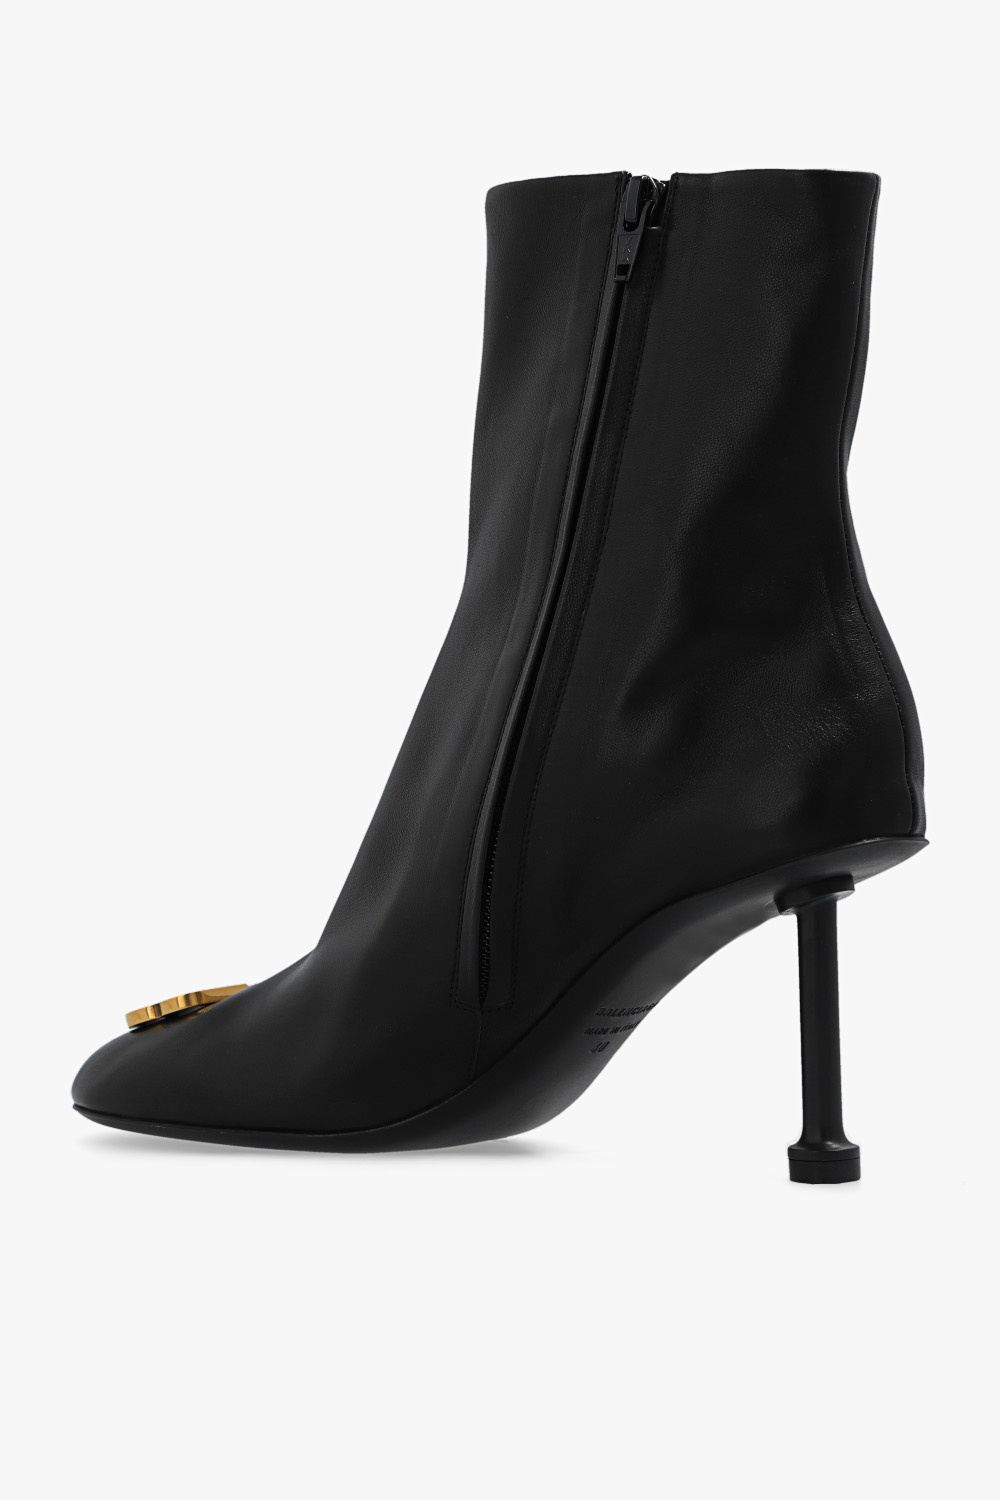 Balenciaga ‘Groupie’ heeled AU2 boots